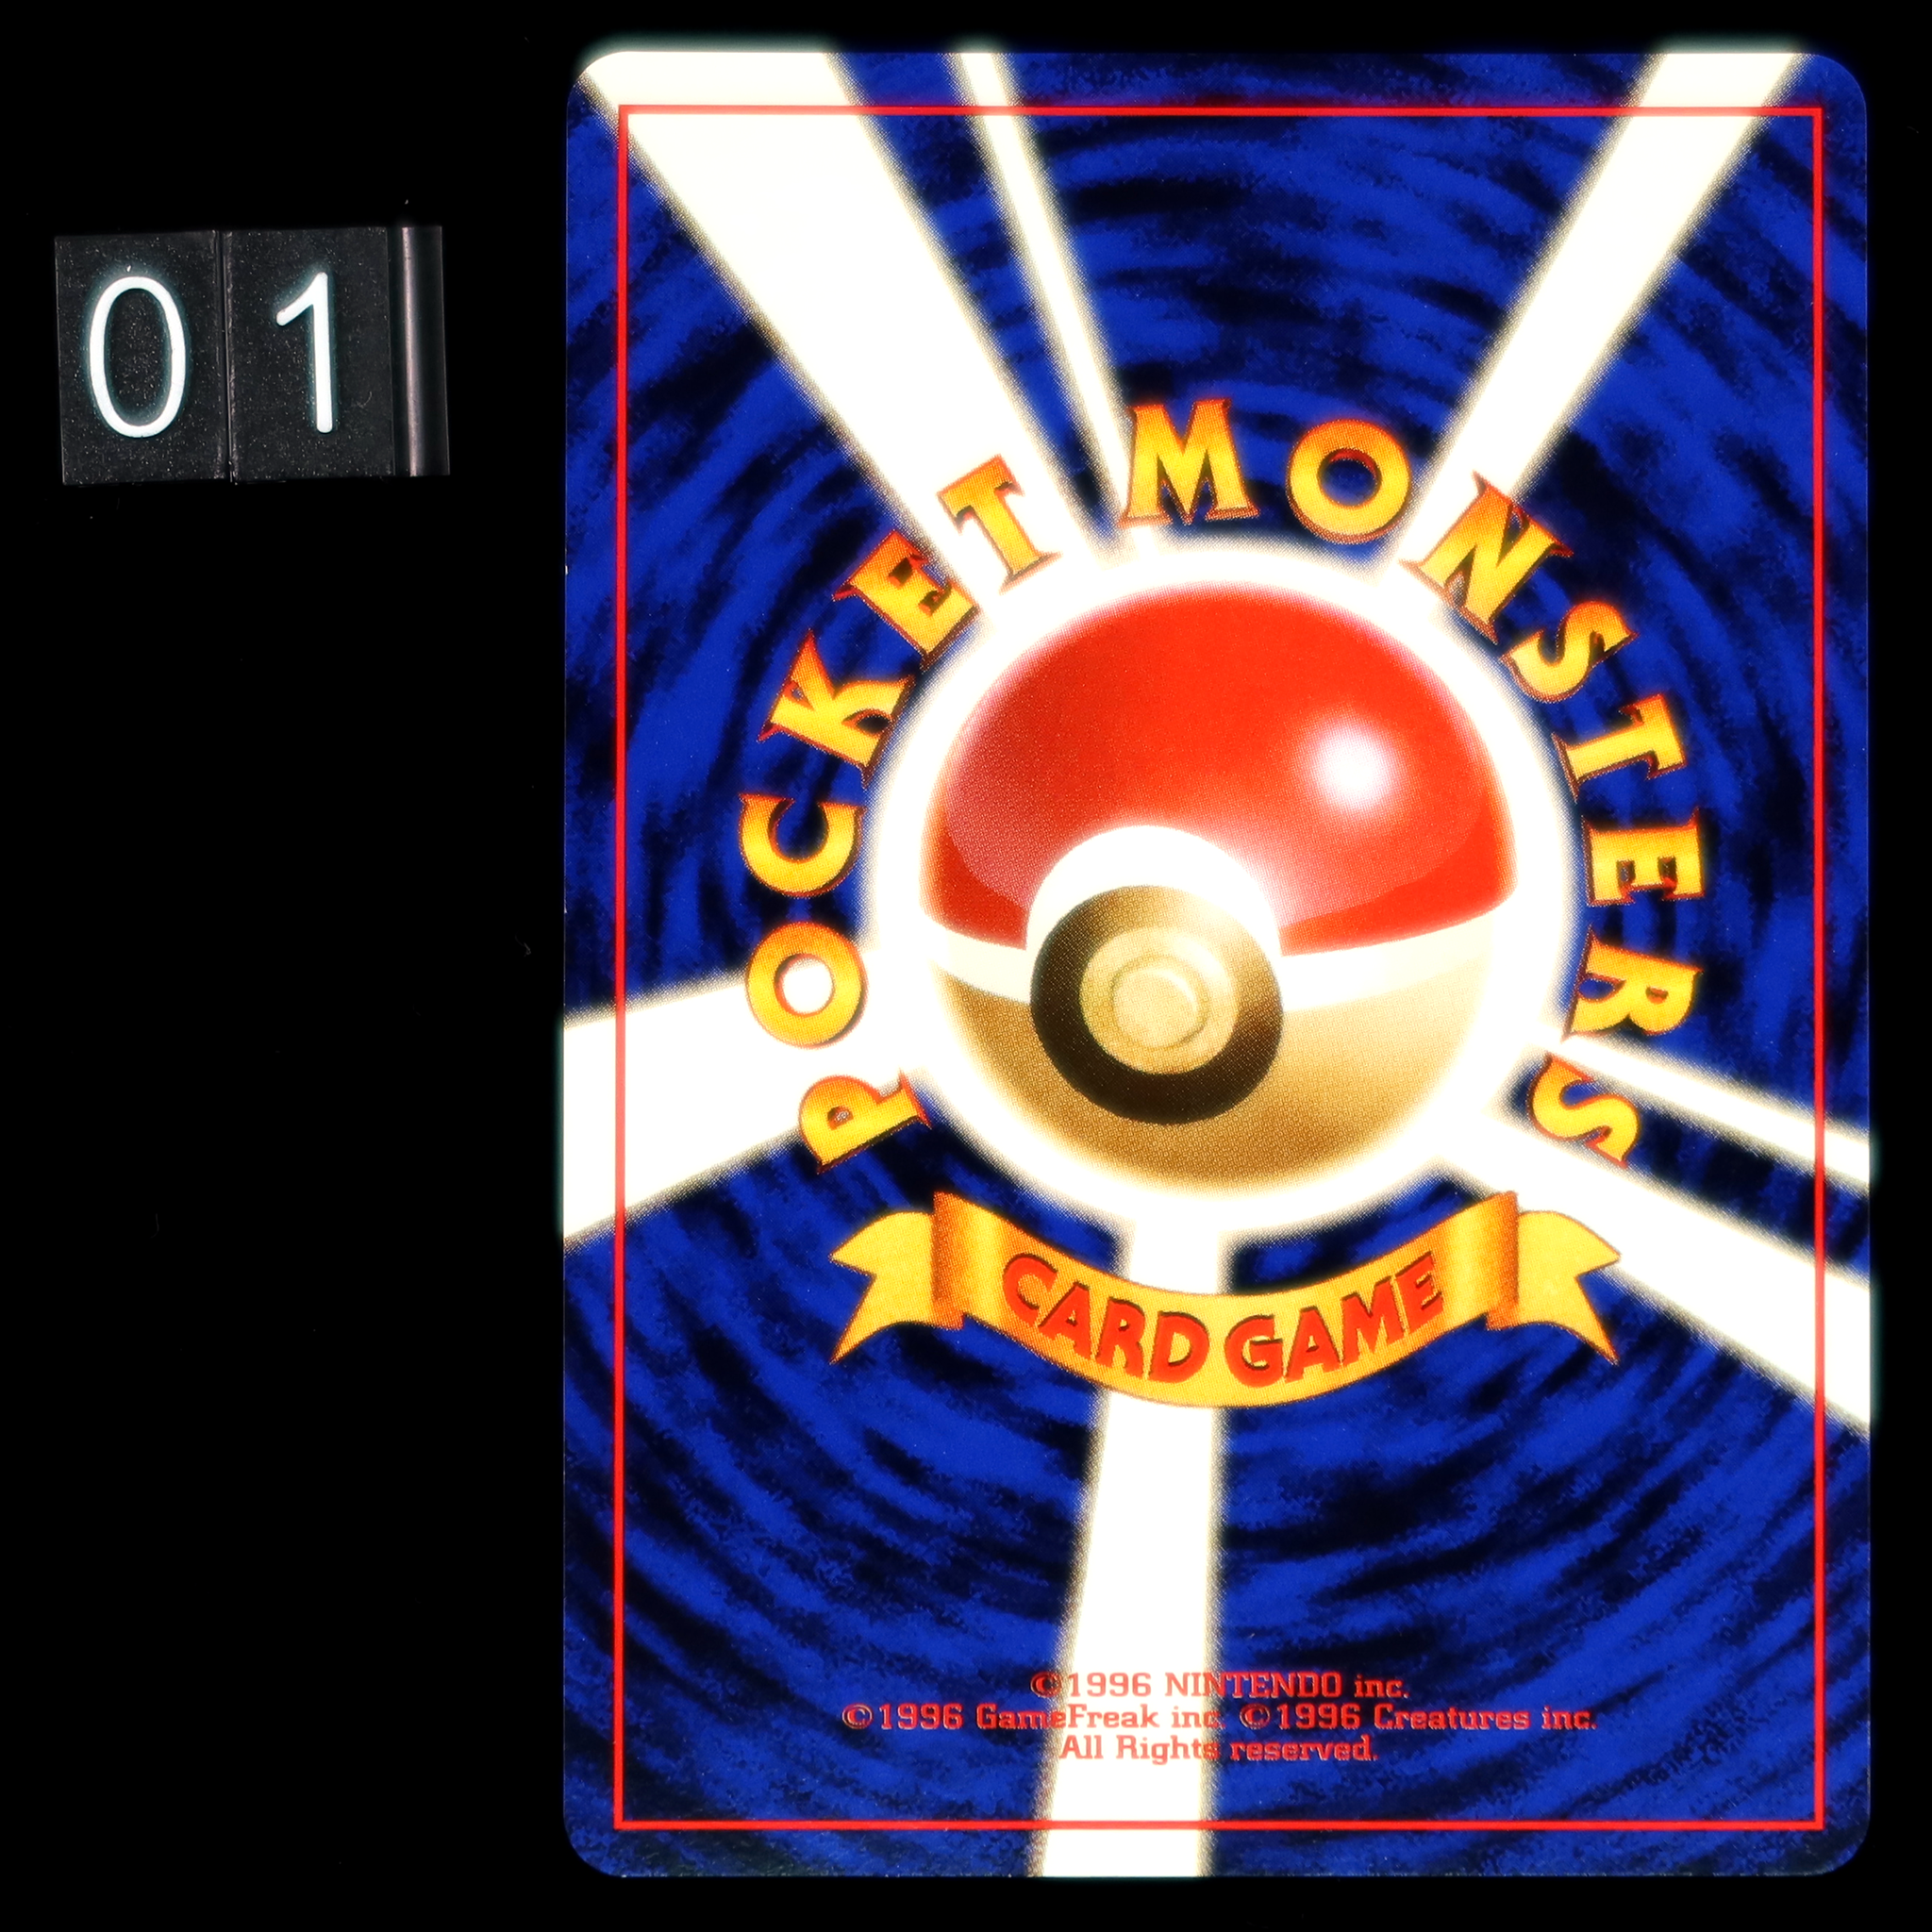 Pokémon Card Game Venusaur [Pokémon Card GB Official Guide Book]